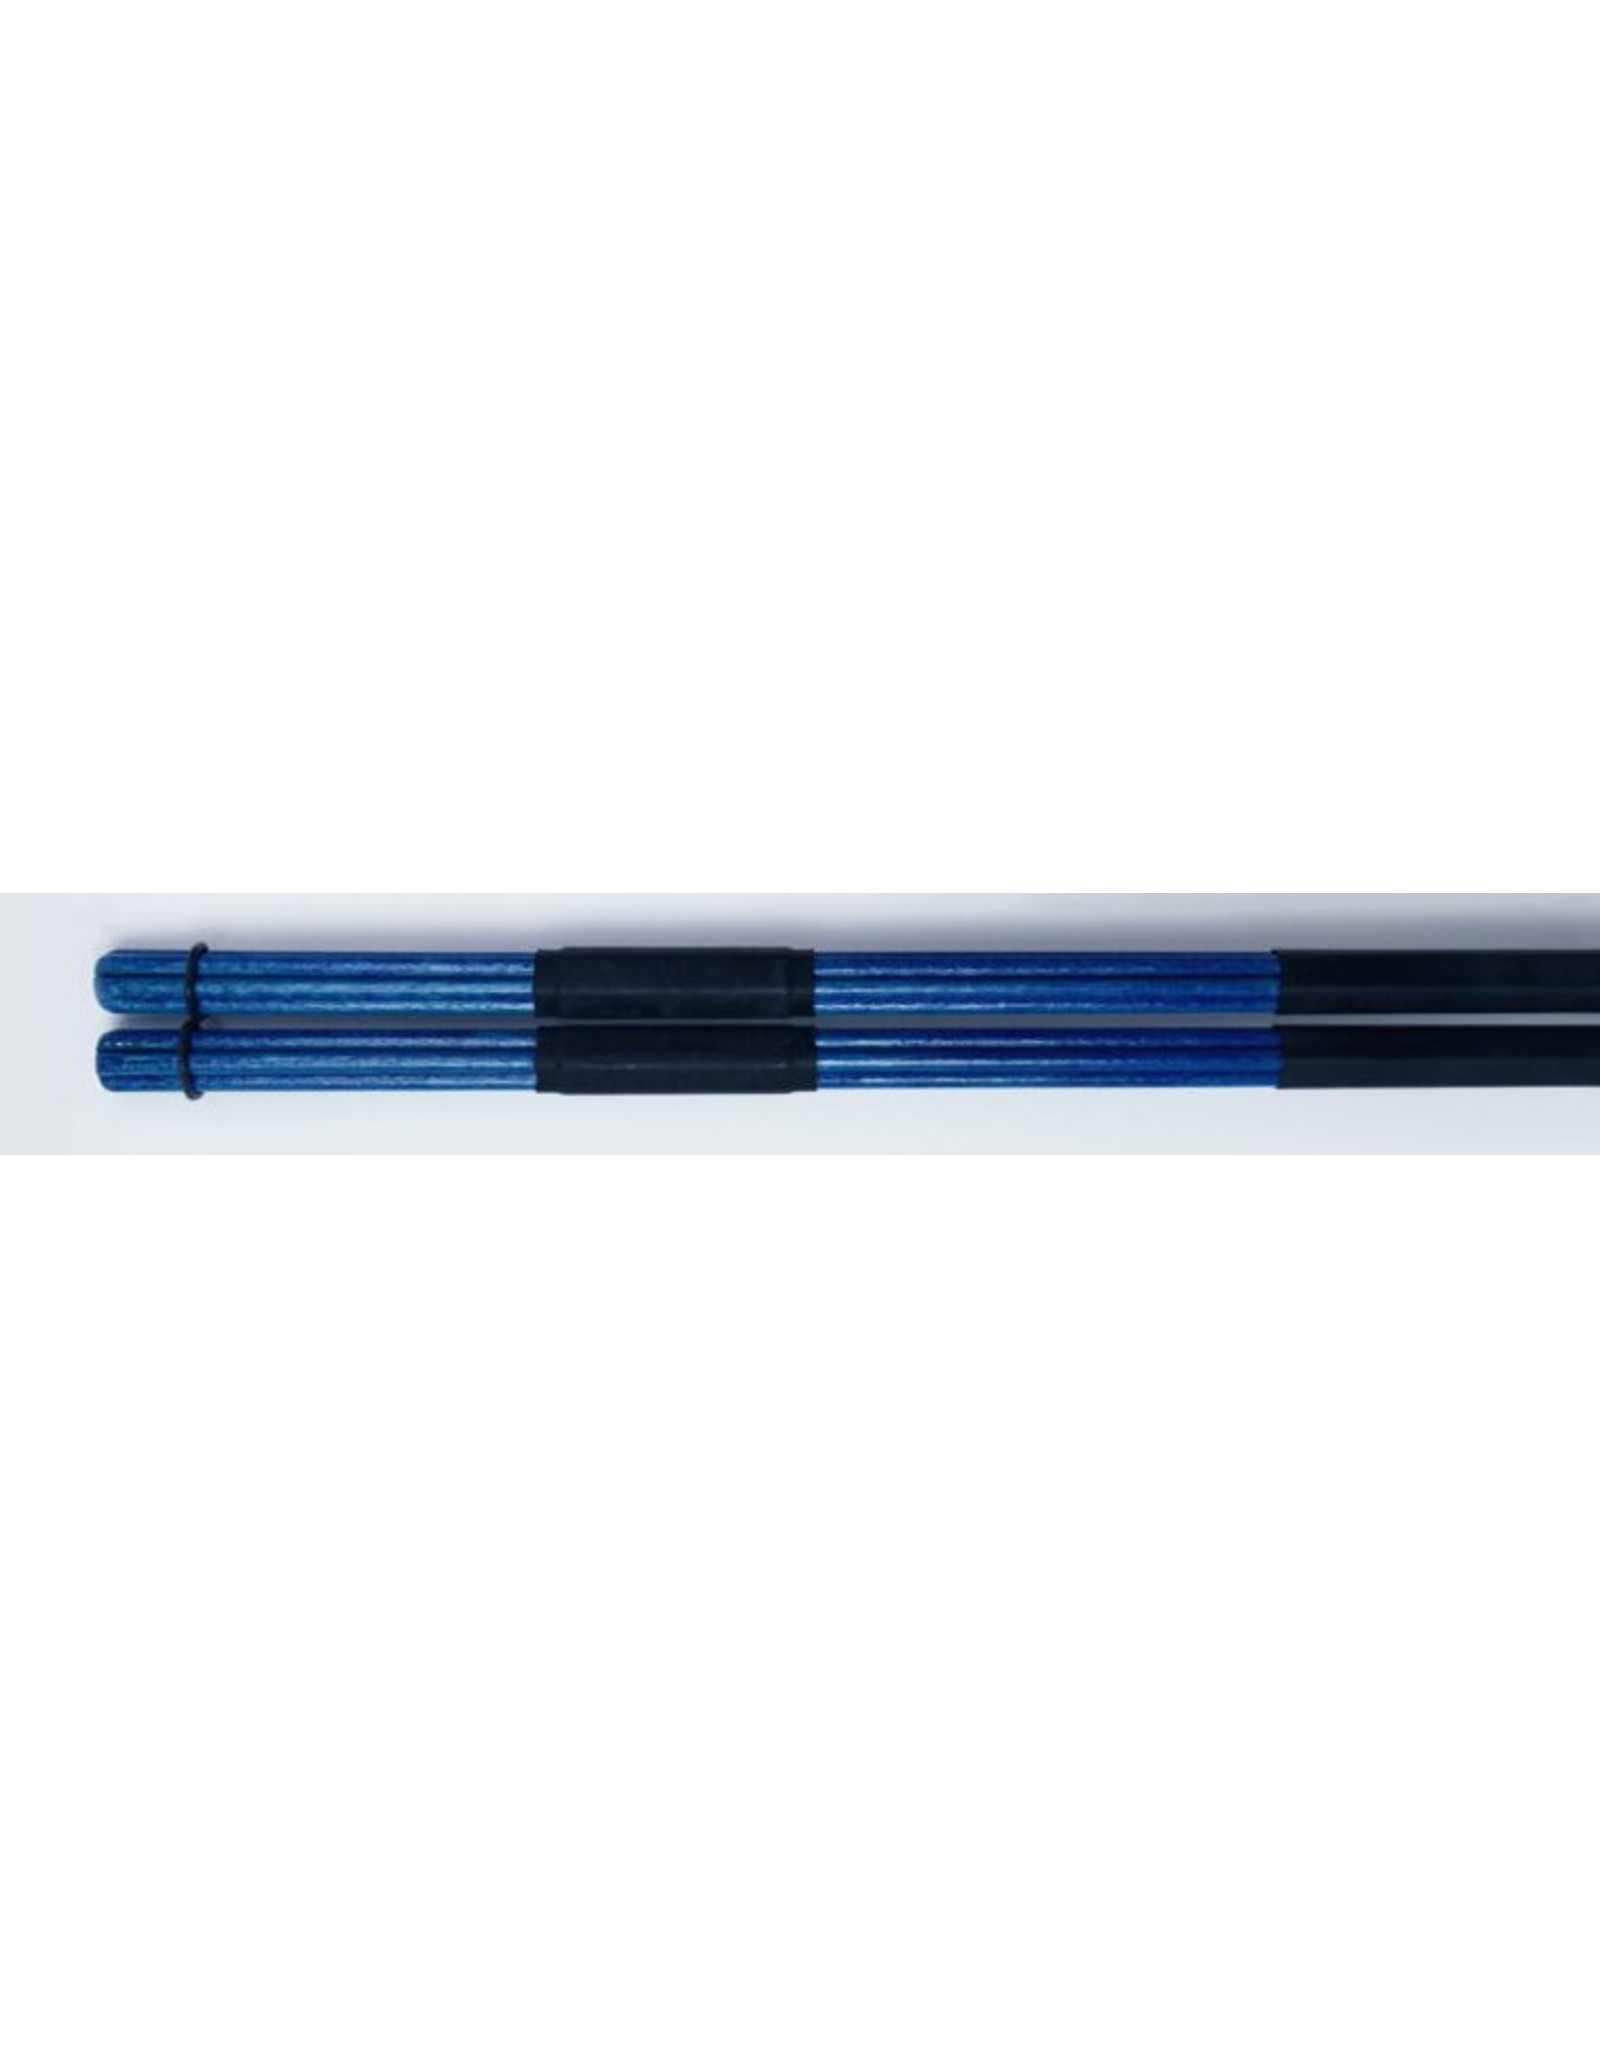 QPercussion QSticks rods colored blue 5a